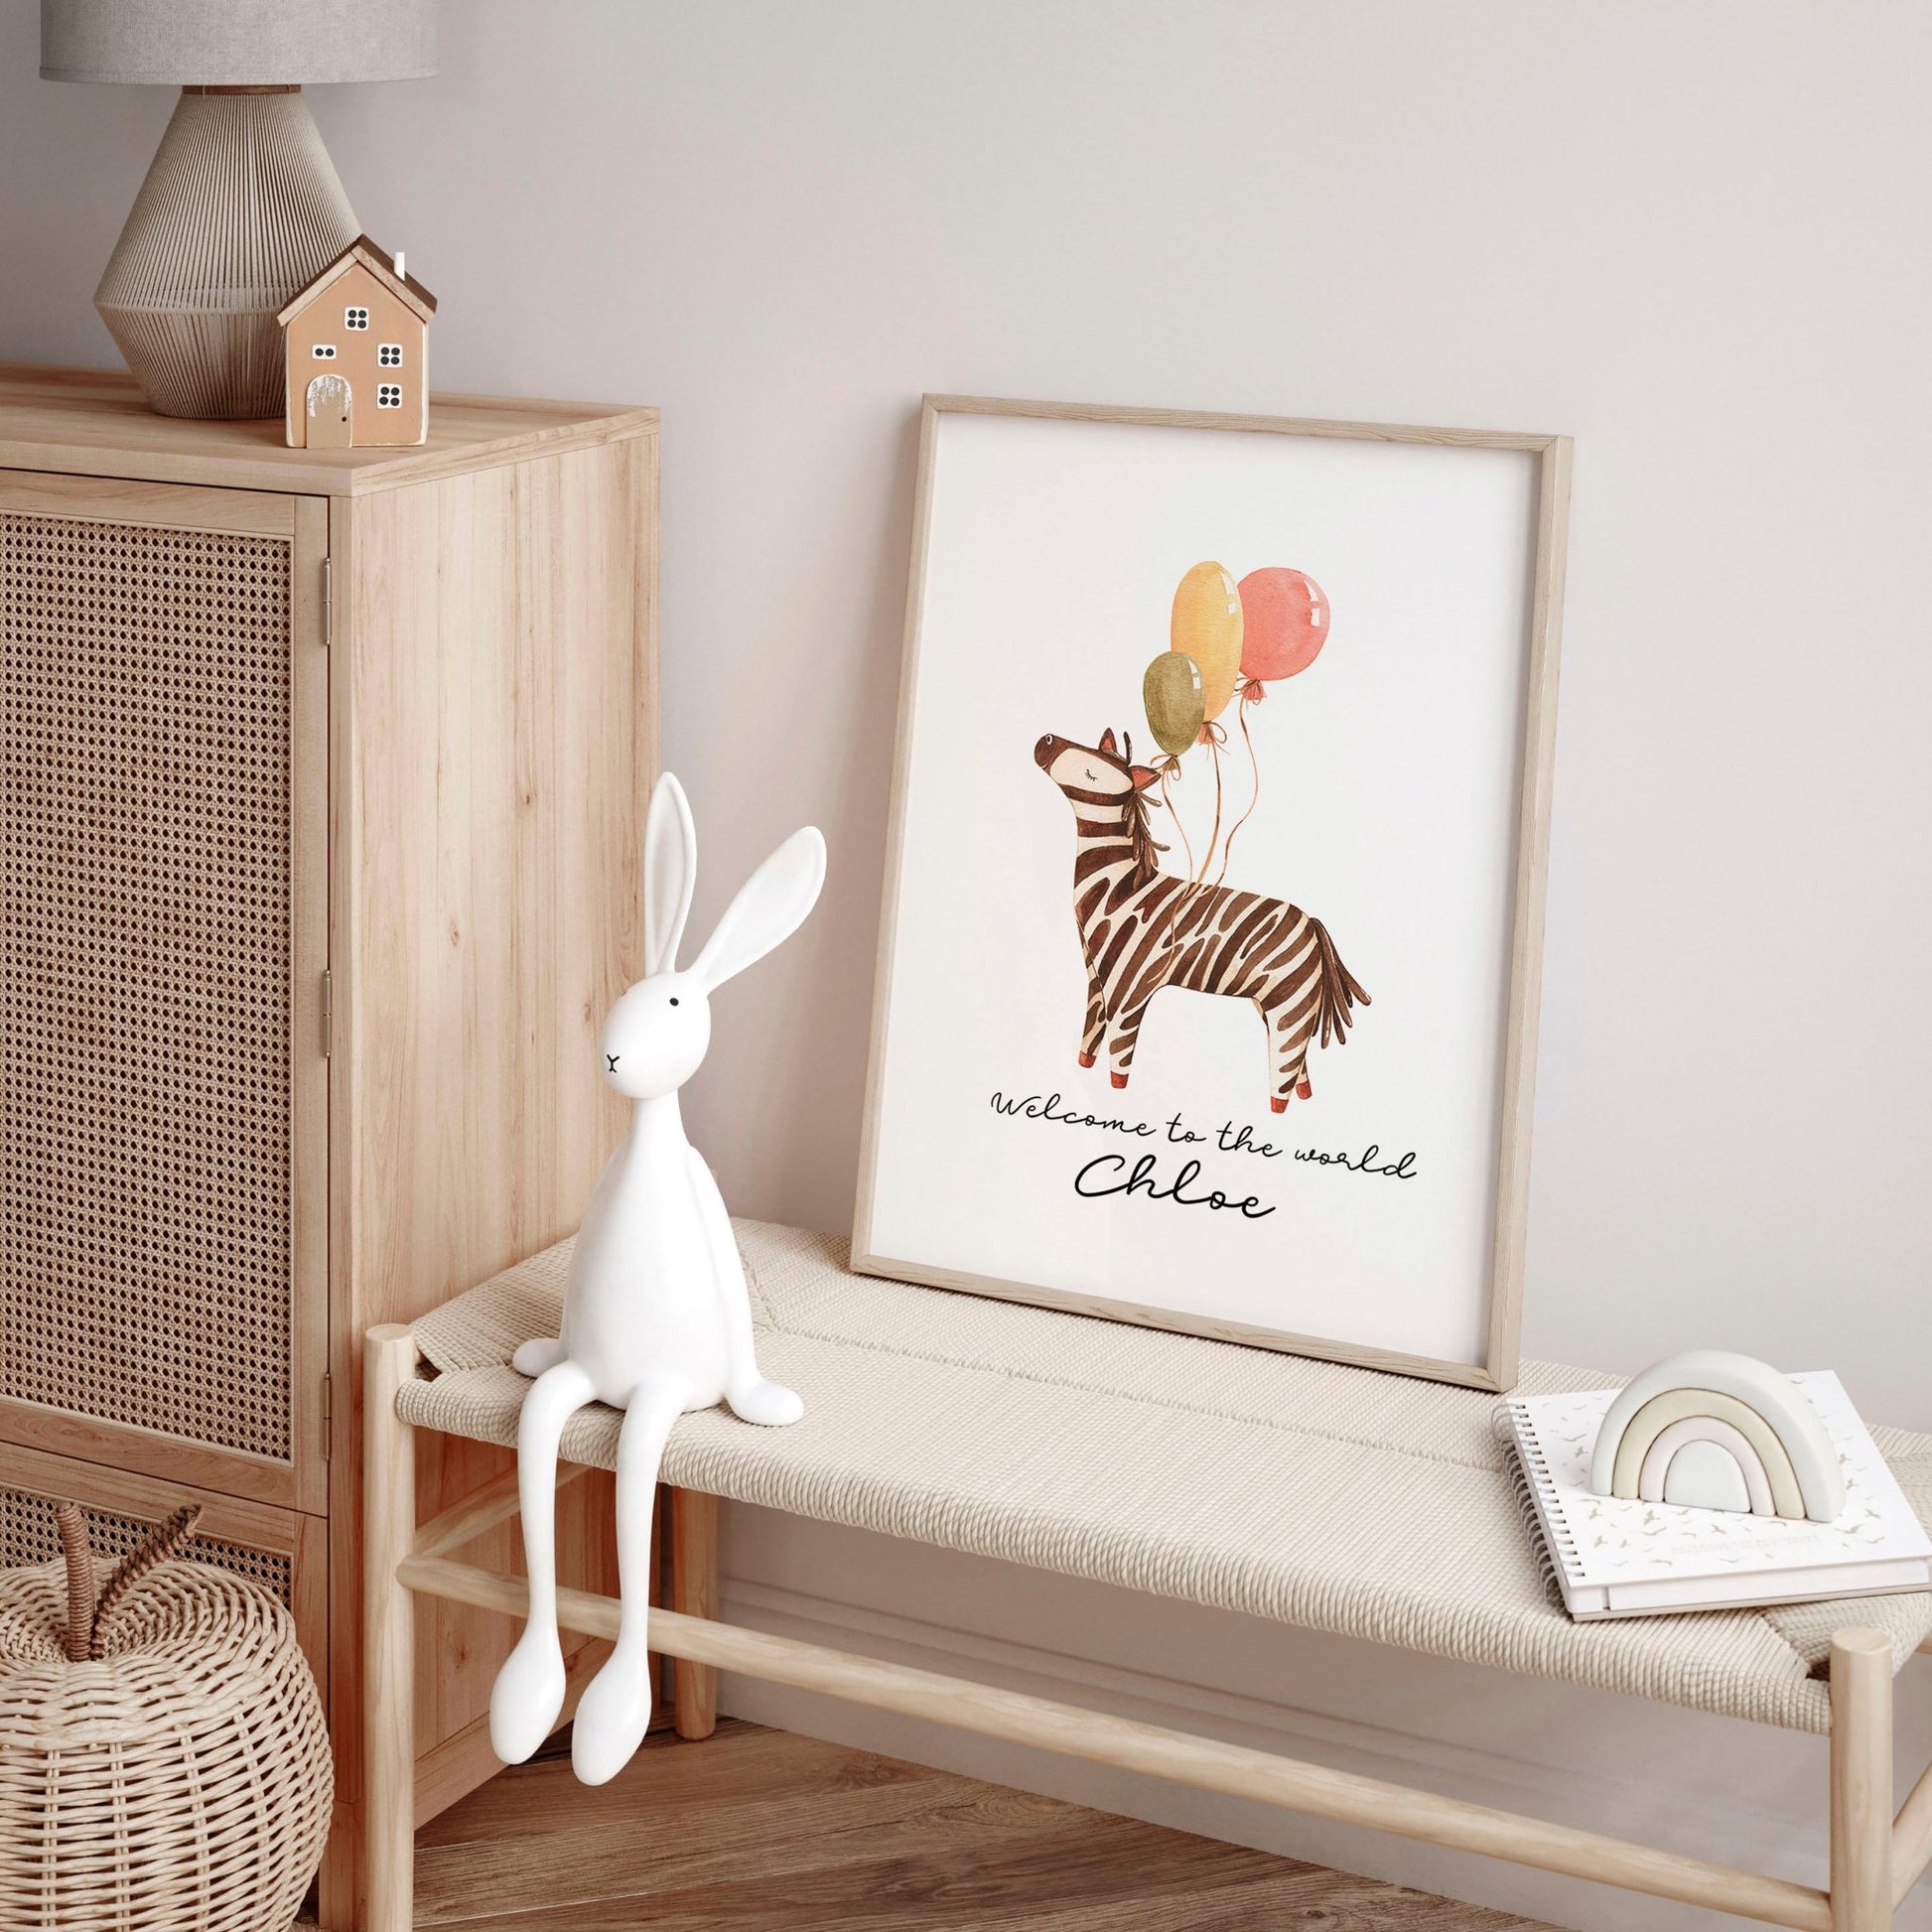 Animal theme for nursery decor Zebra wall art print